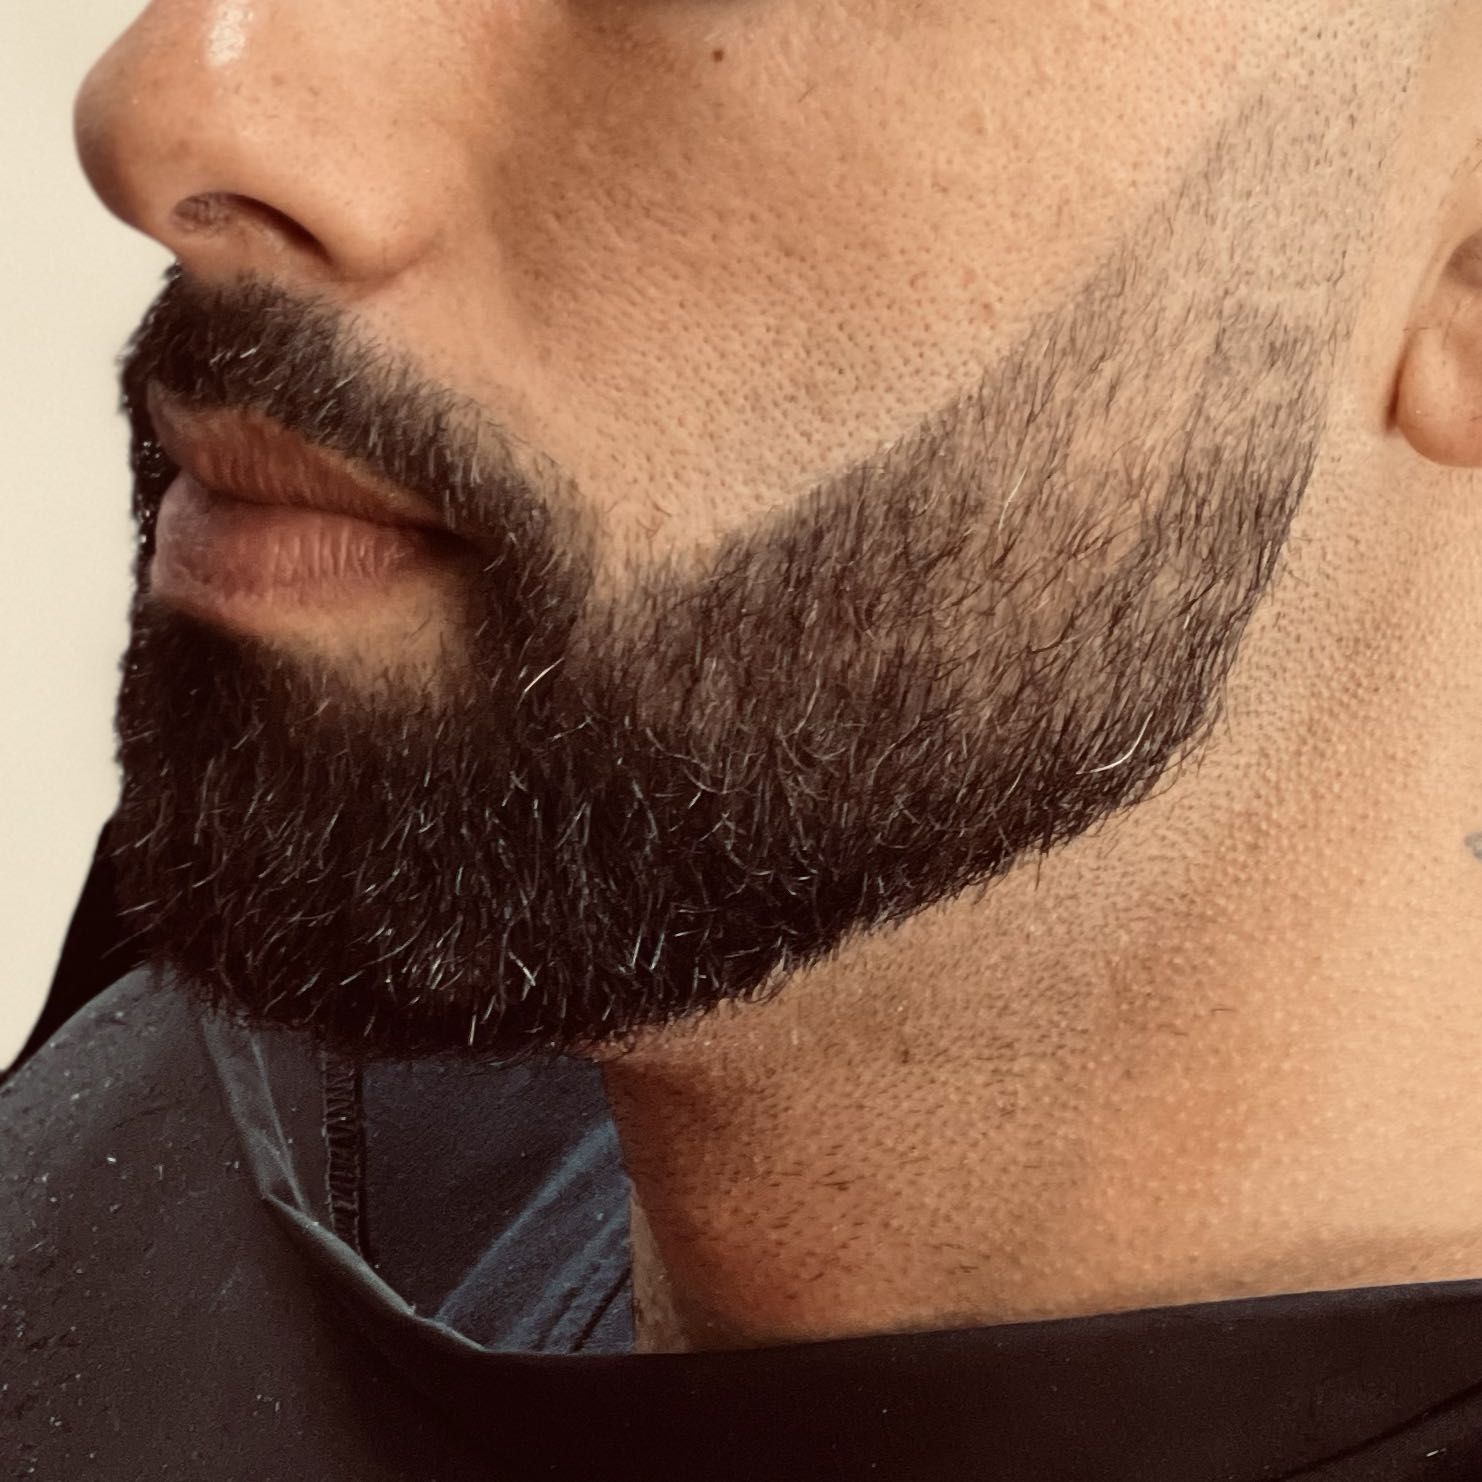 𝐑𝐄𝐂𝐎𝐑𝐓𝐄 𝐃𝐄 𝐁𝐀𝐑𝐁𝐀 ( beard trimming) portfolio